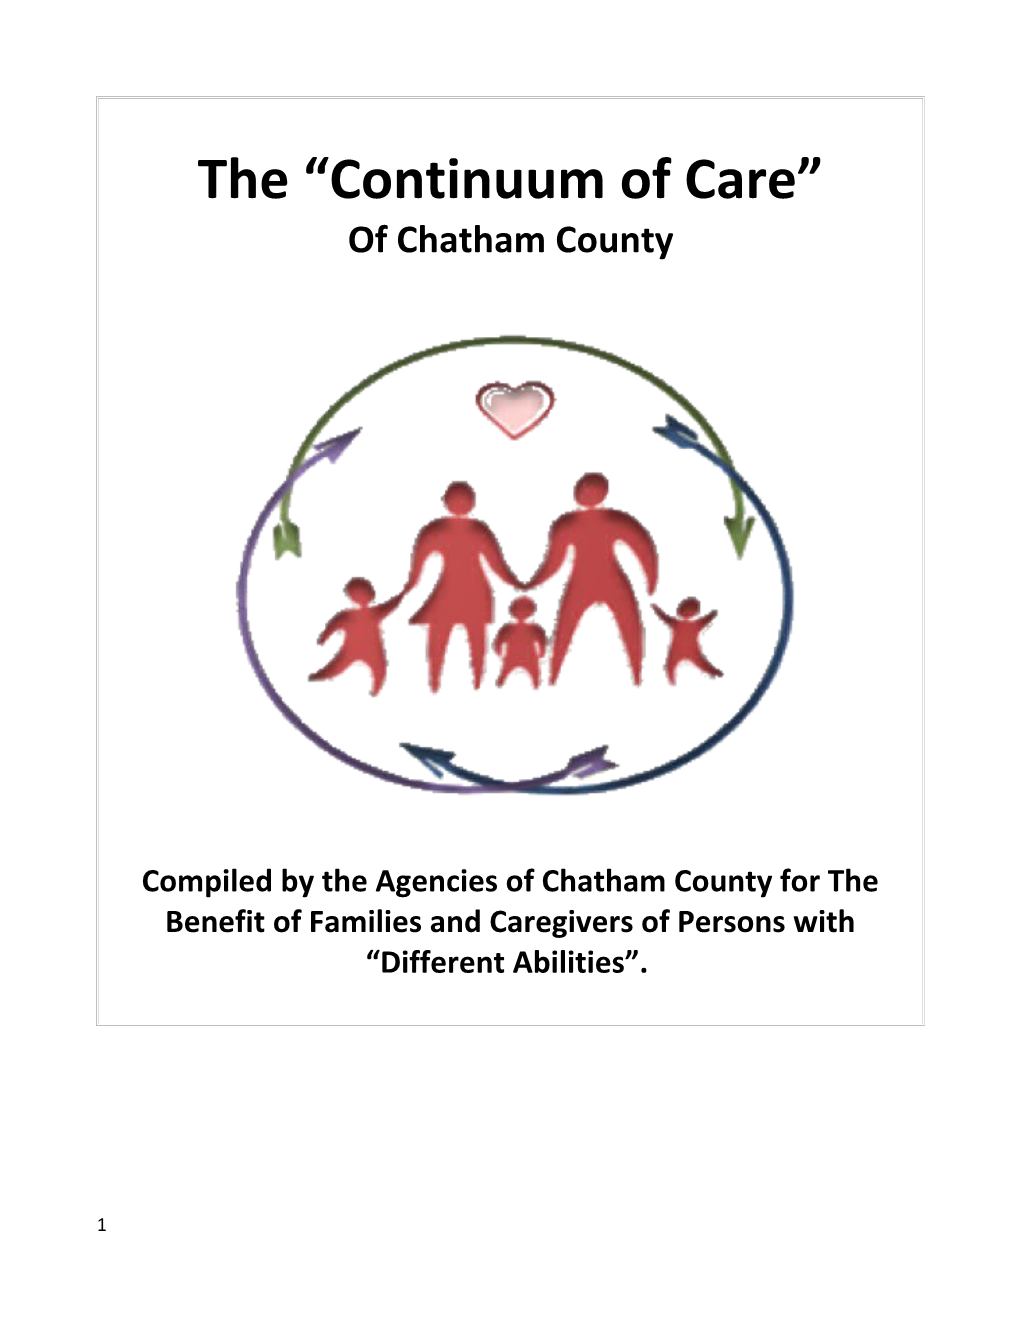 The Continuum of Care